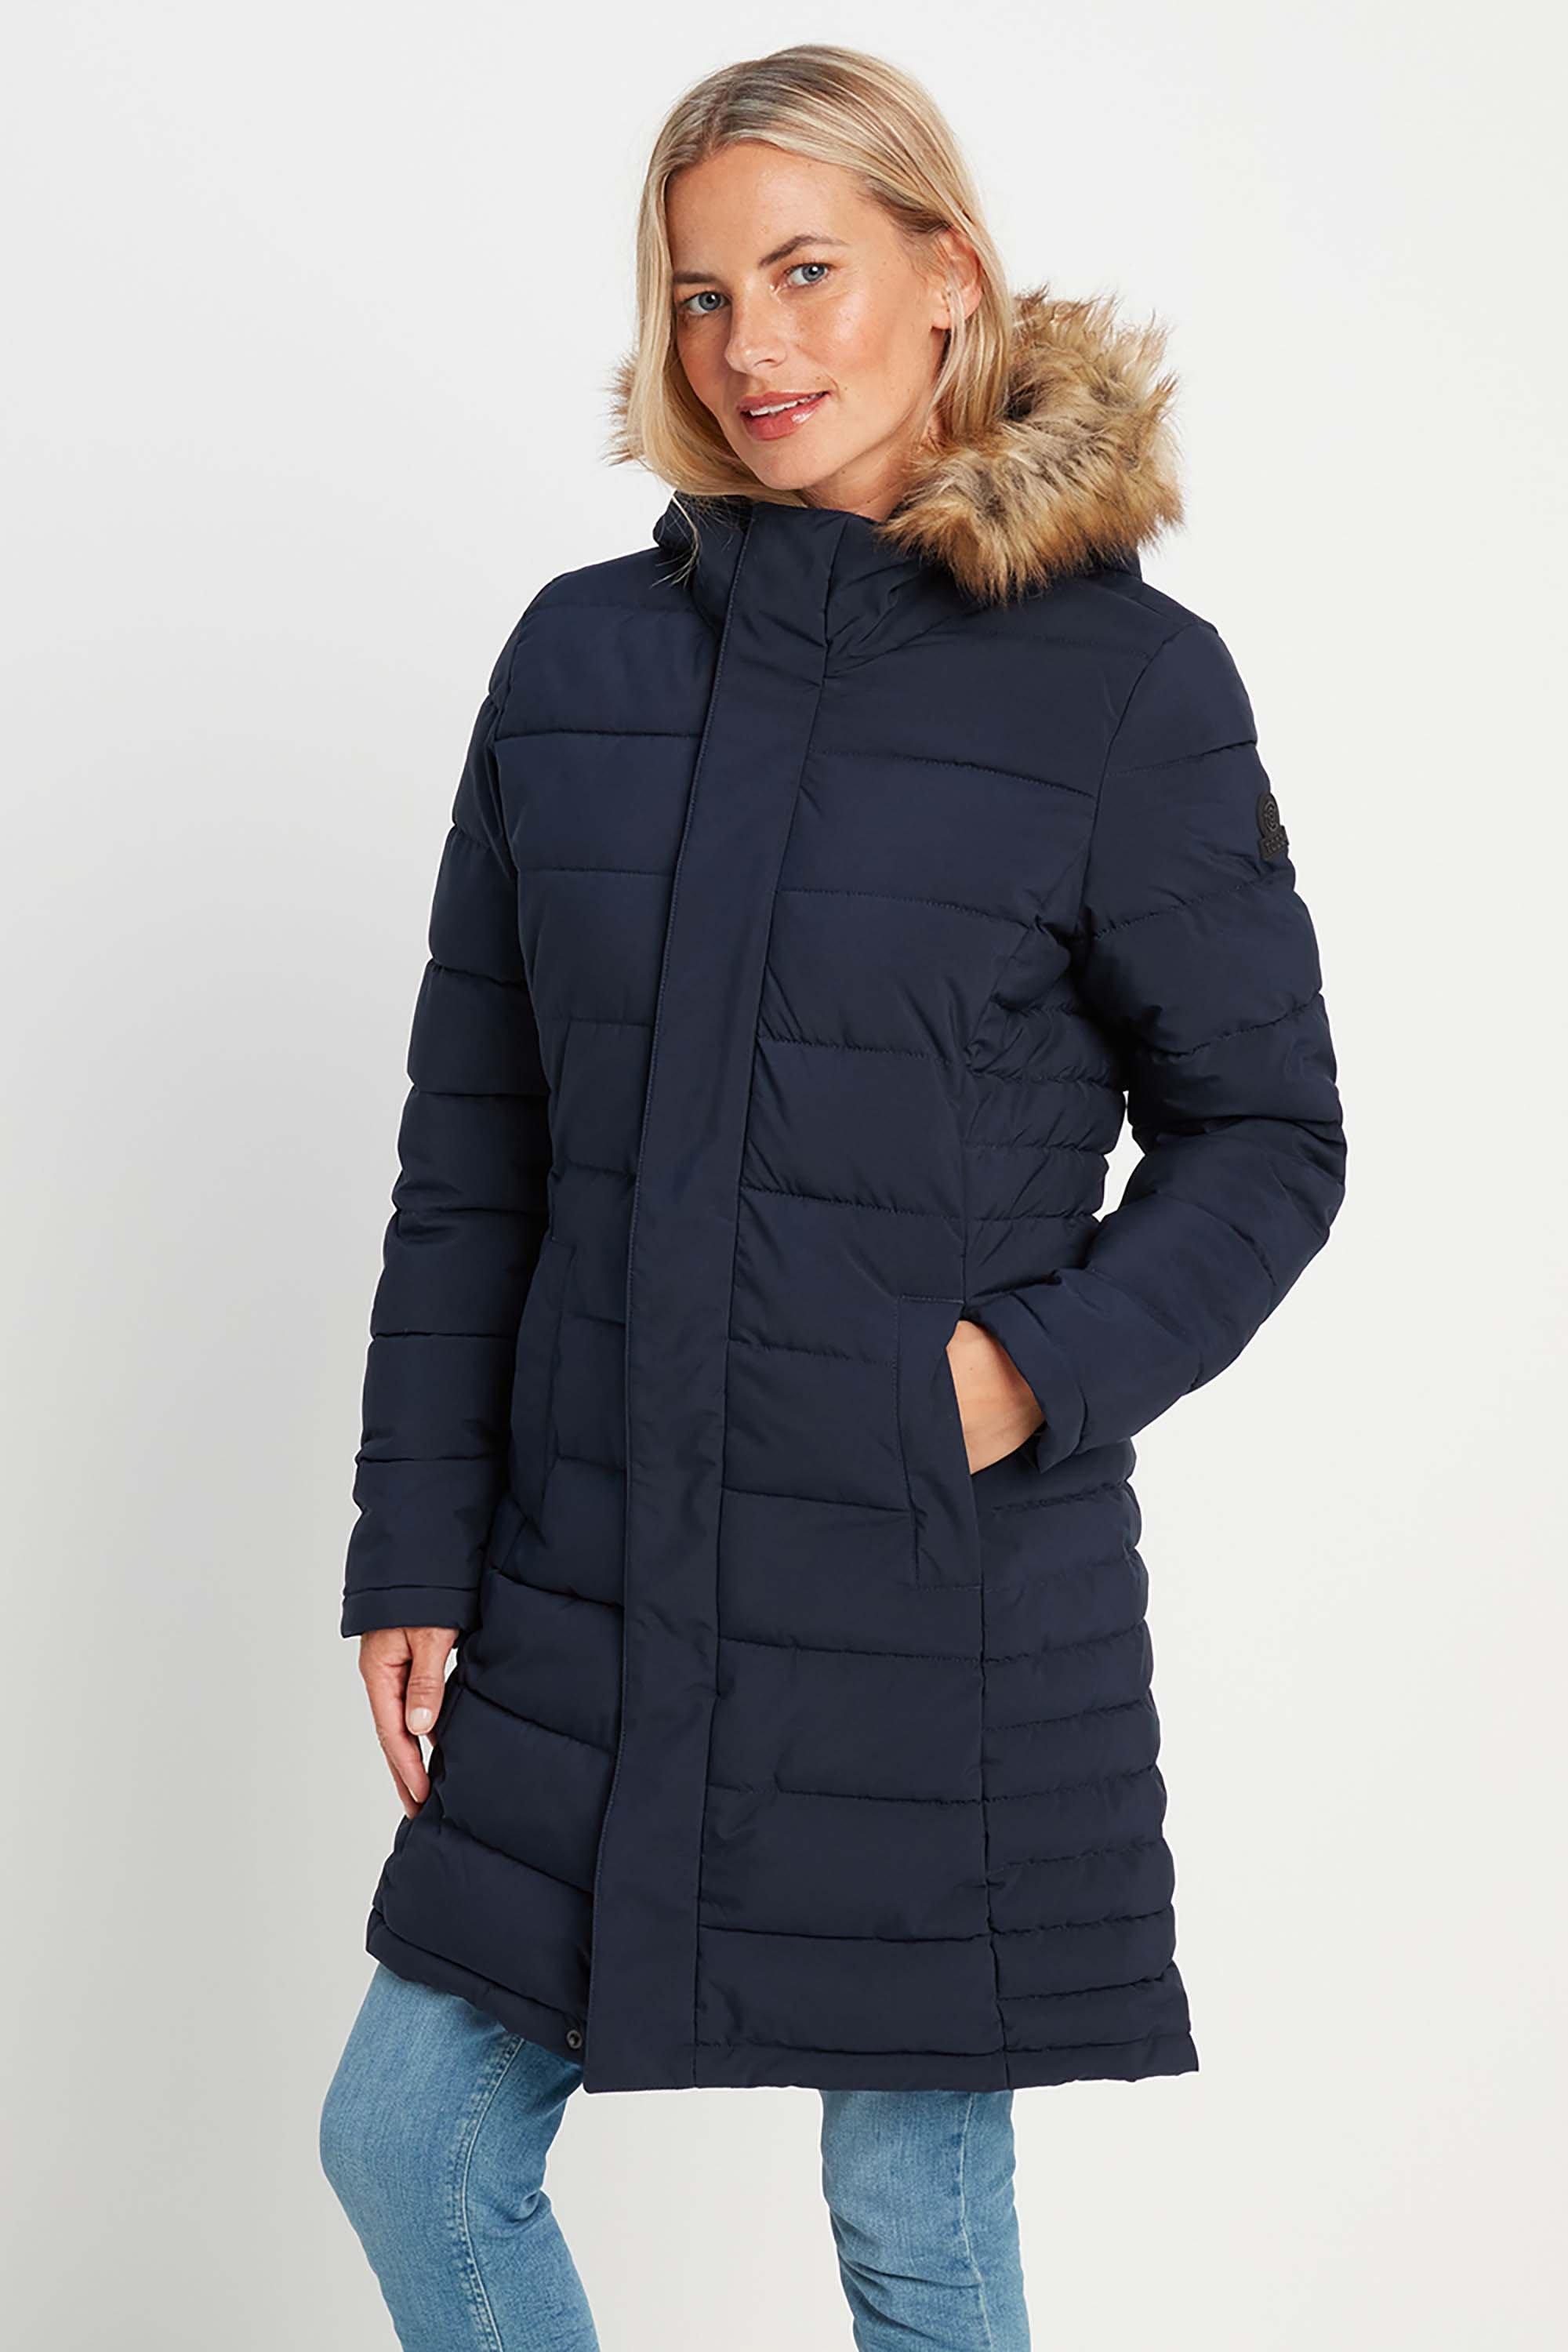 Jackets & Coats | 'Firbeck' Insulated Jacket | TOG24